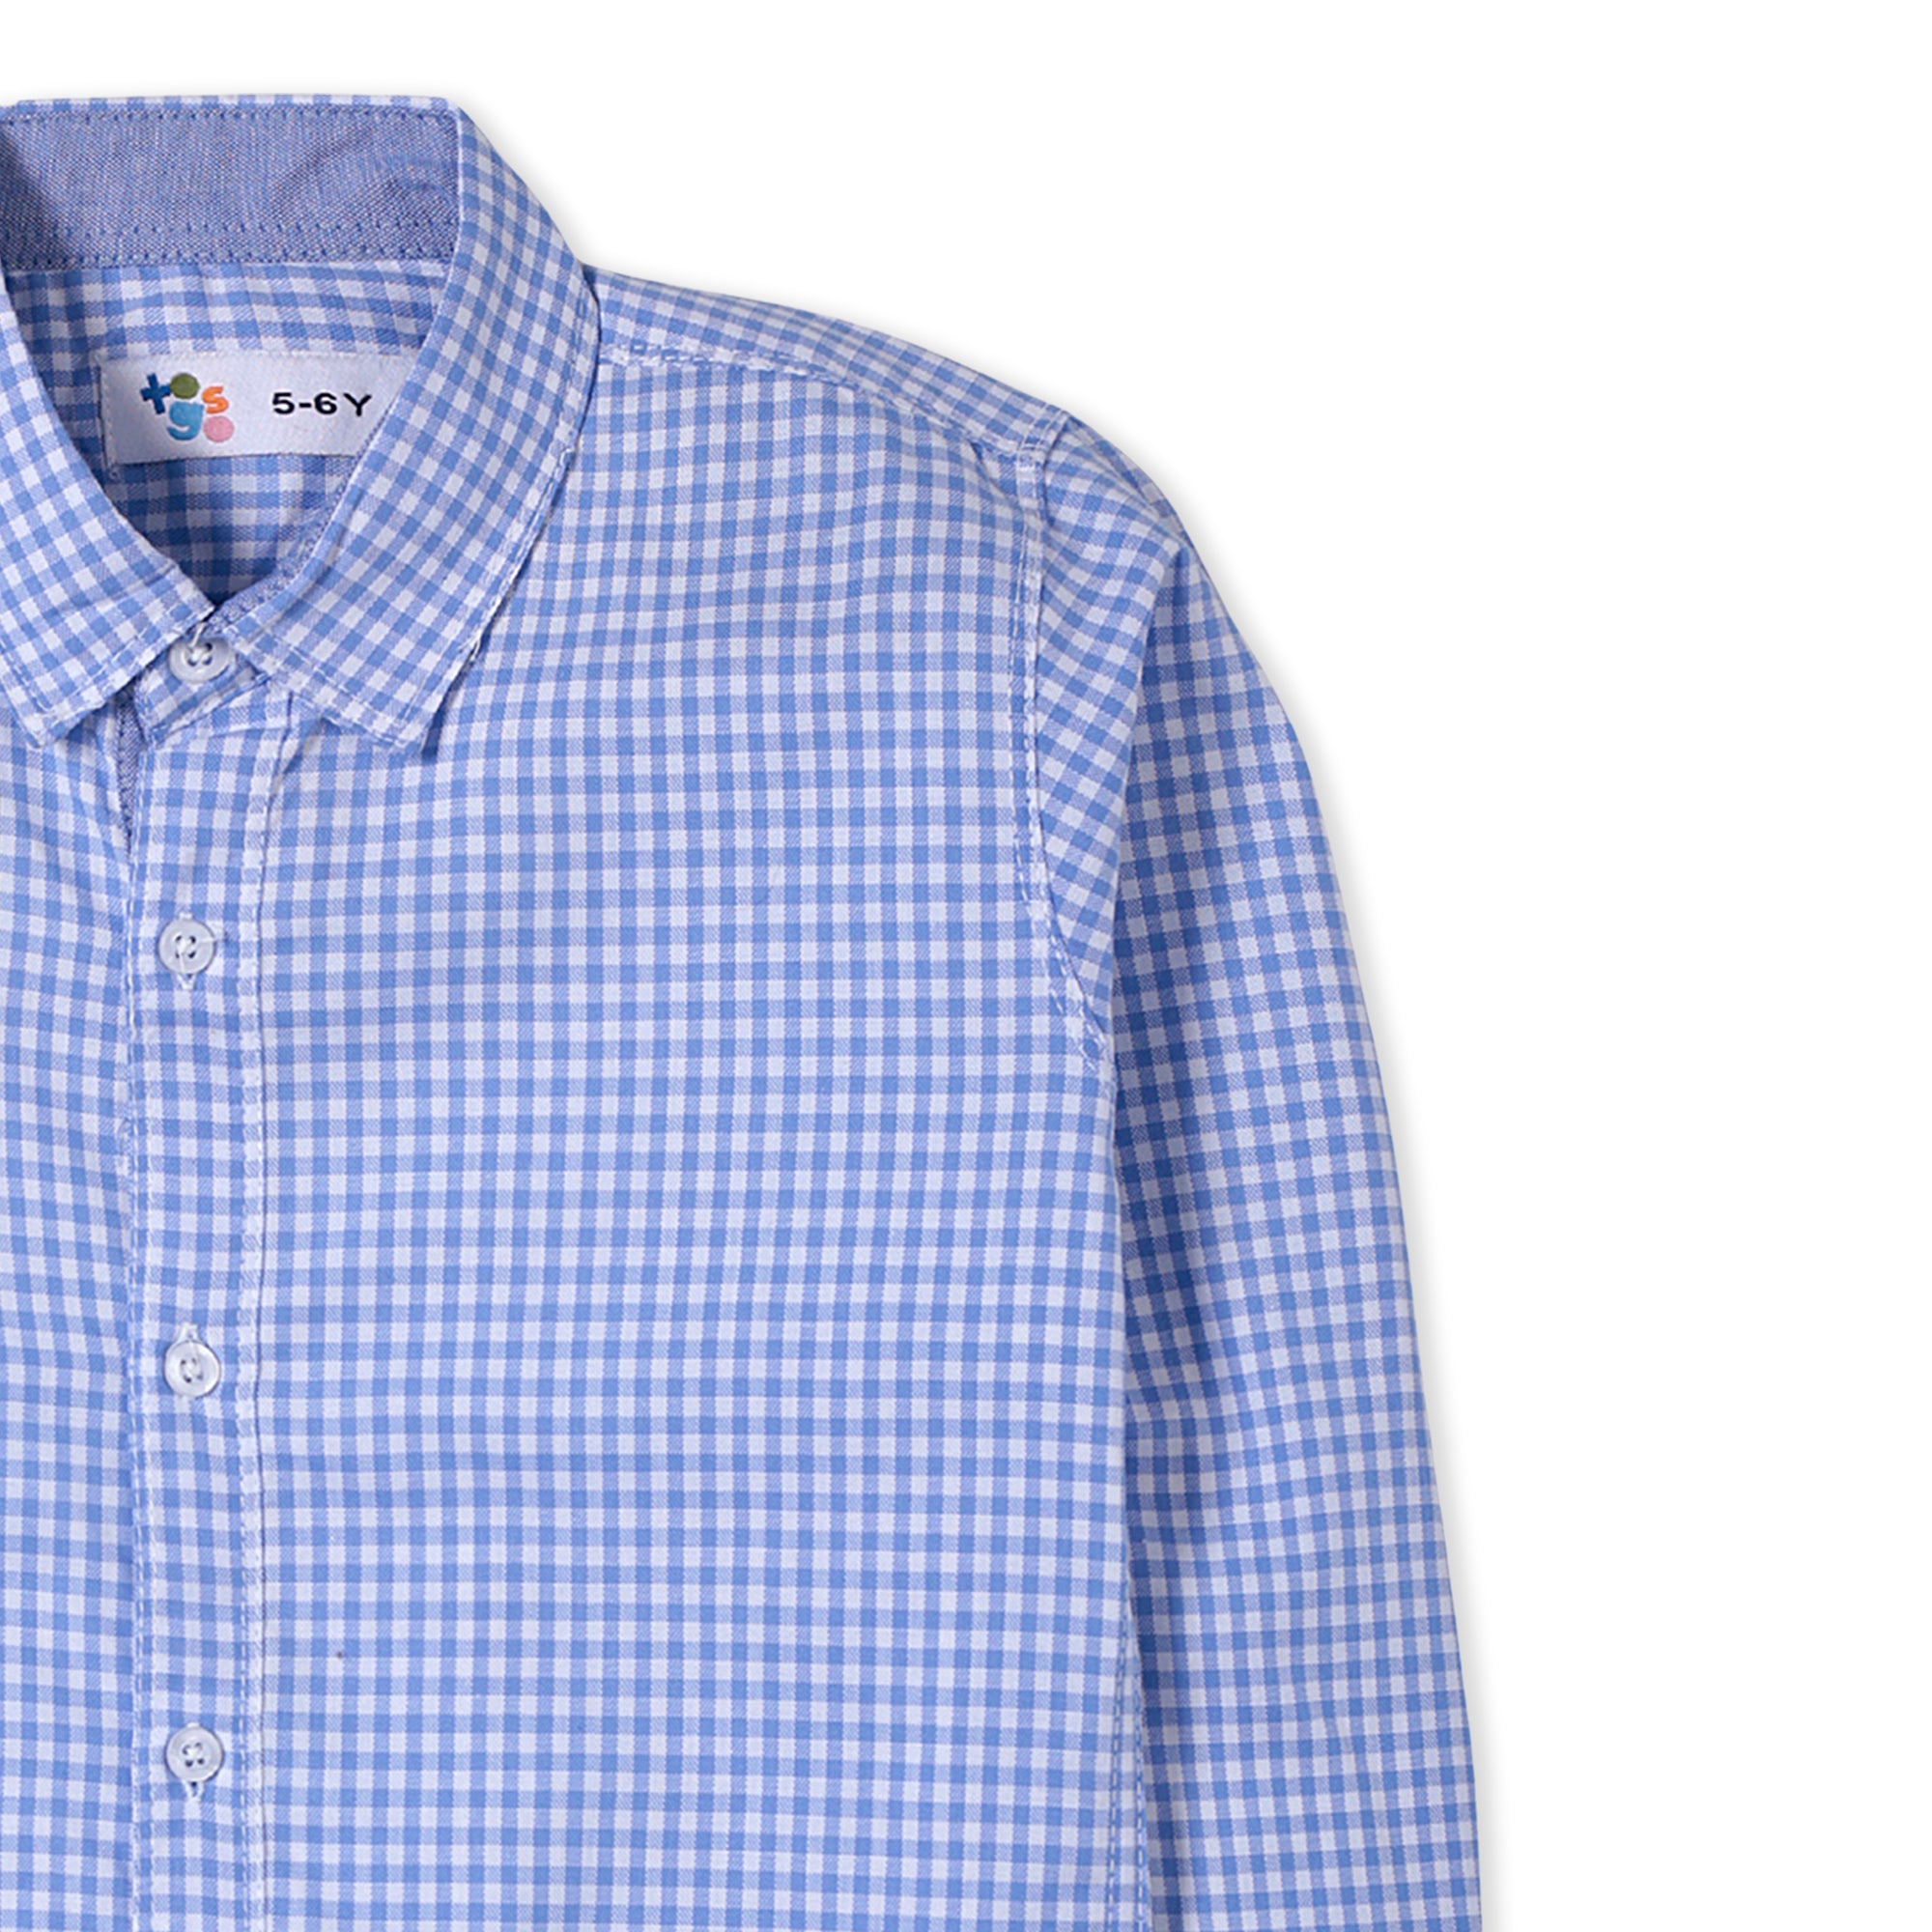 Blue & White Checkerd Shirt